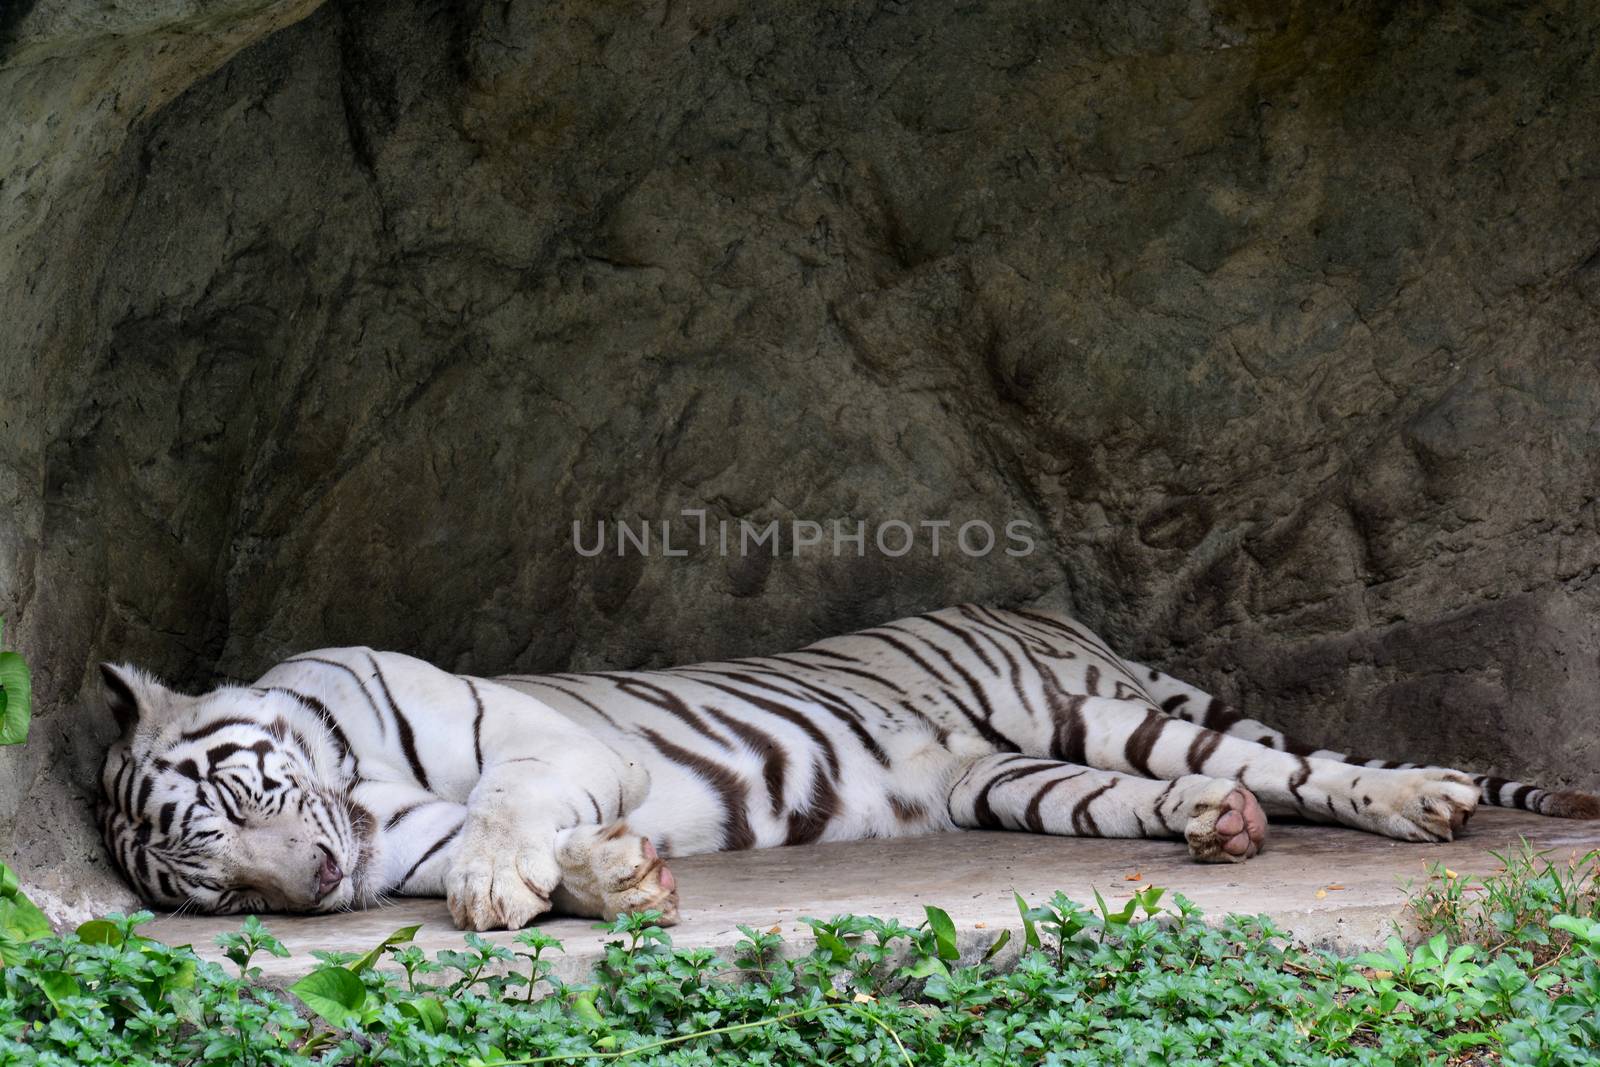 White tiger or White tiger sleeping